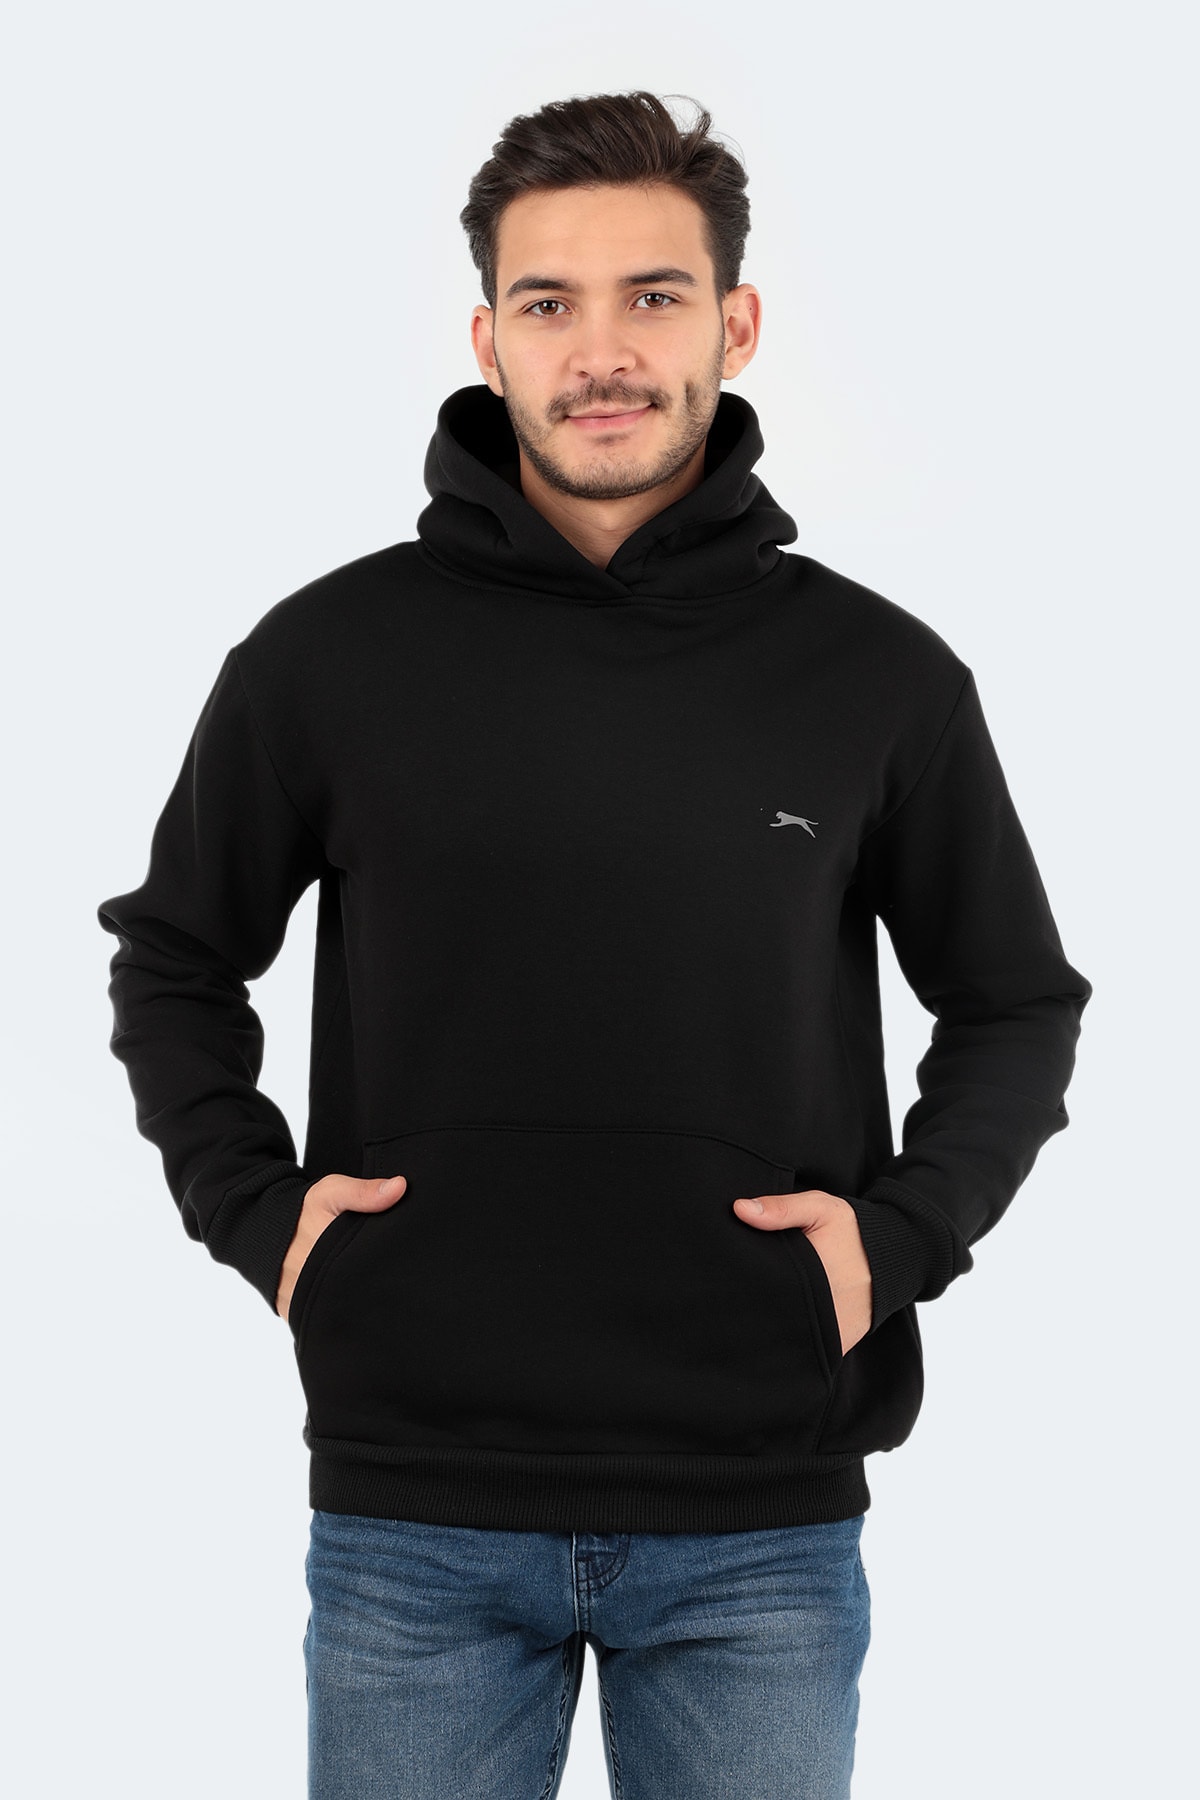 Slazenger Kapena Men's Sweatshirt Black